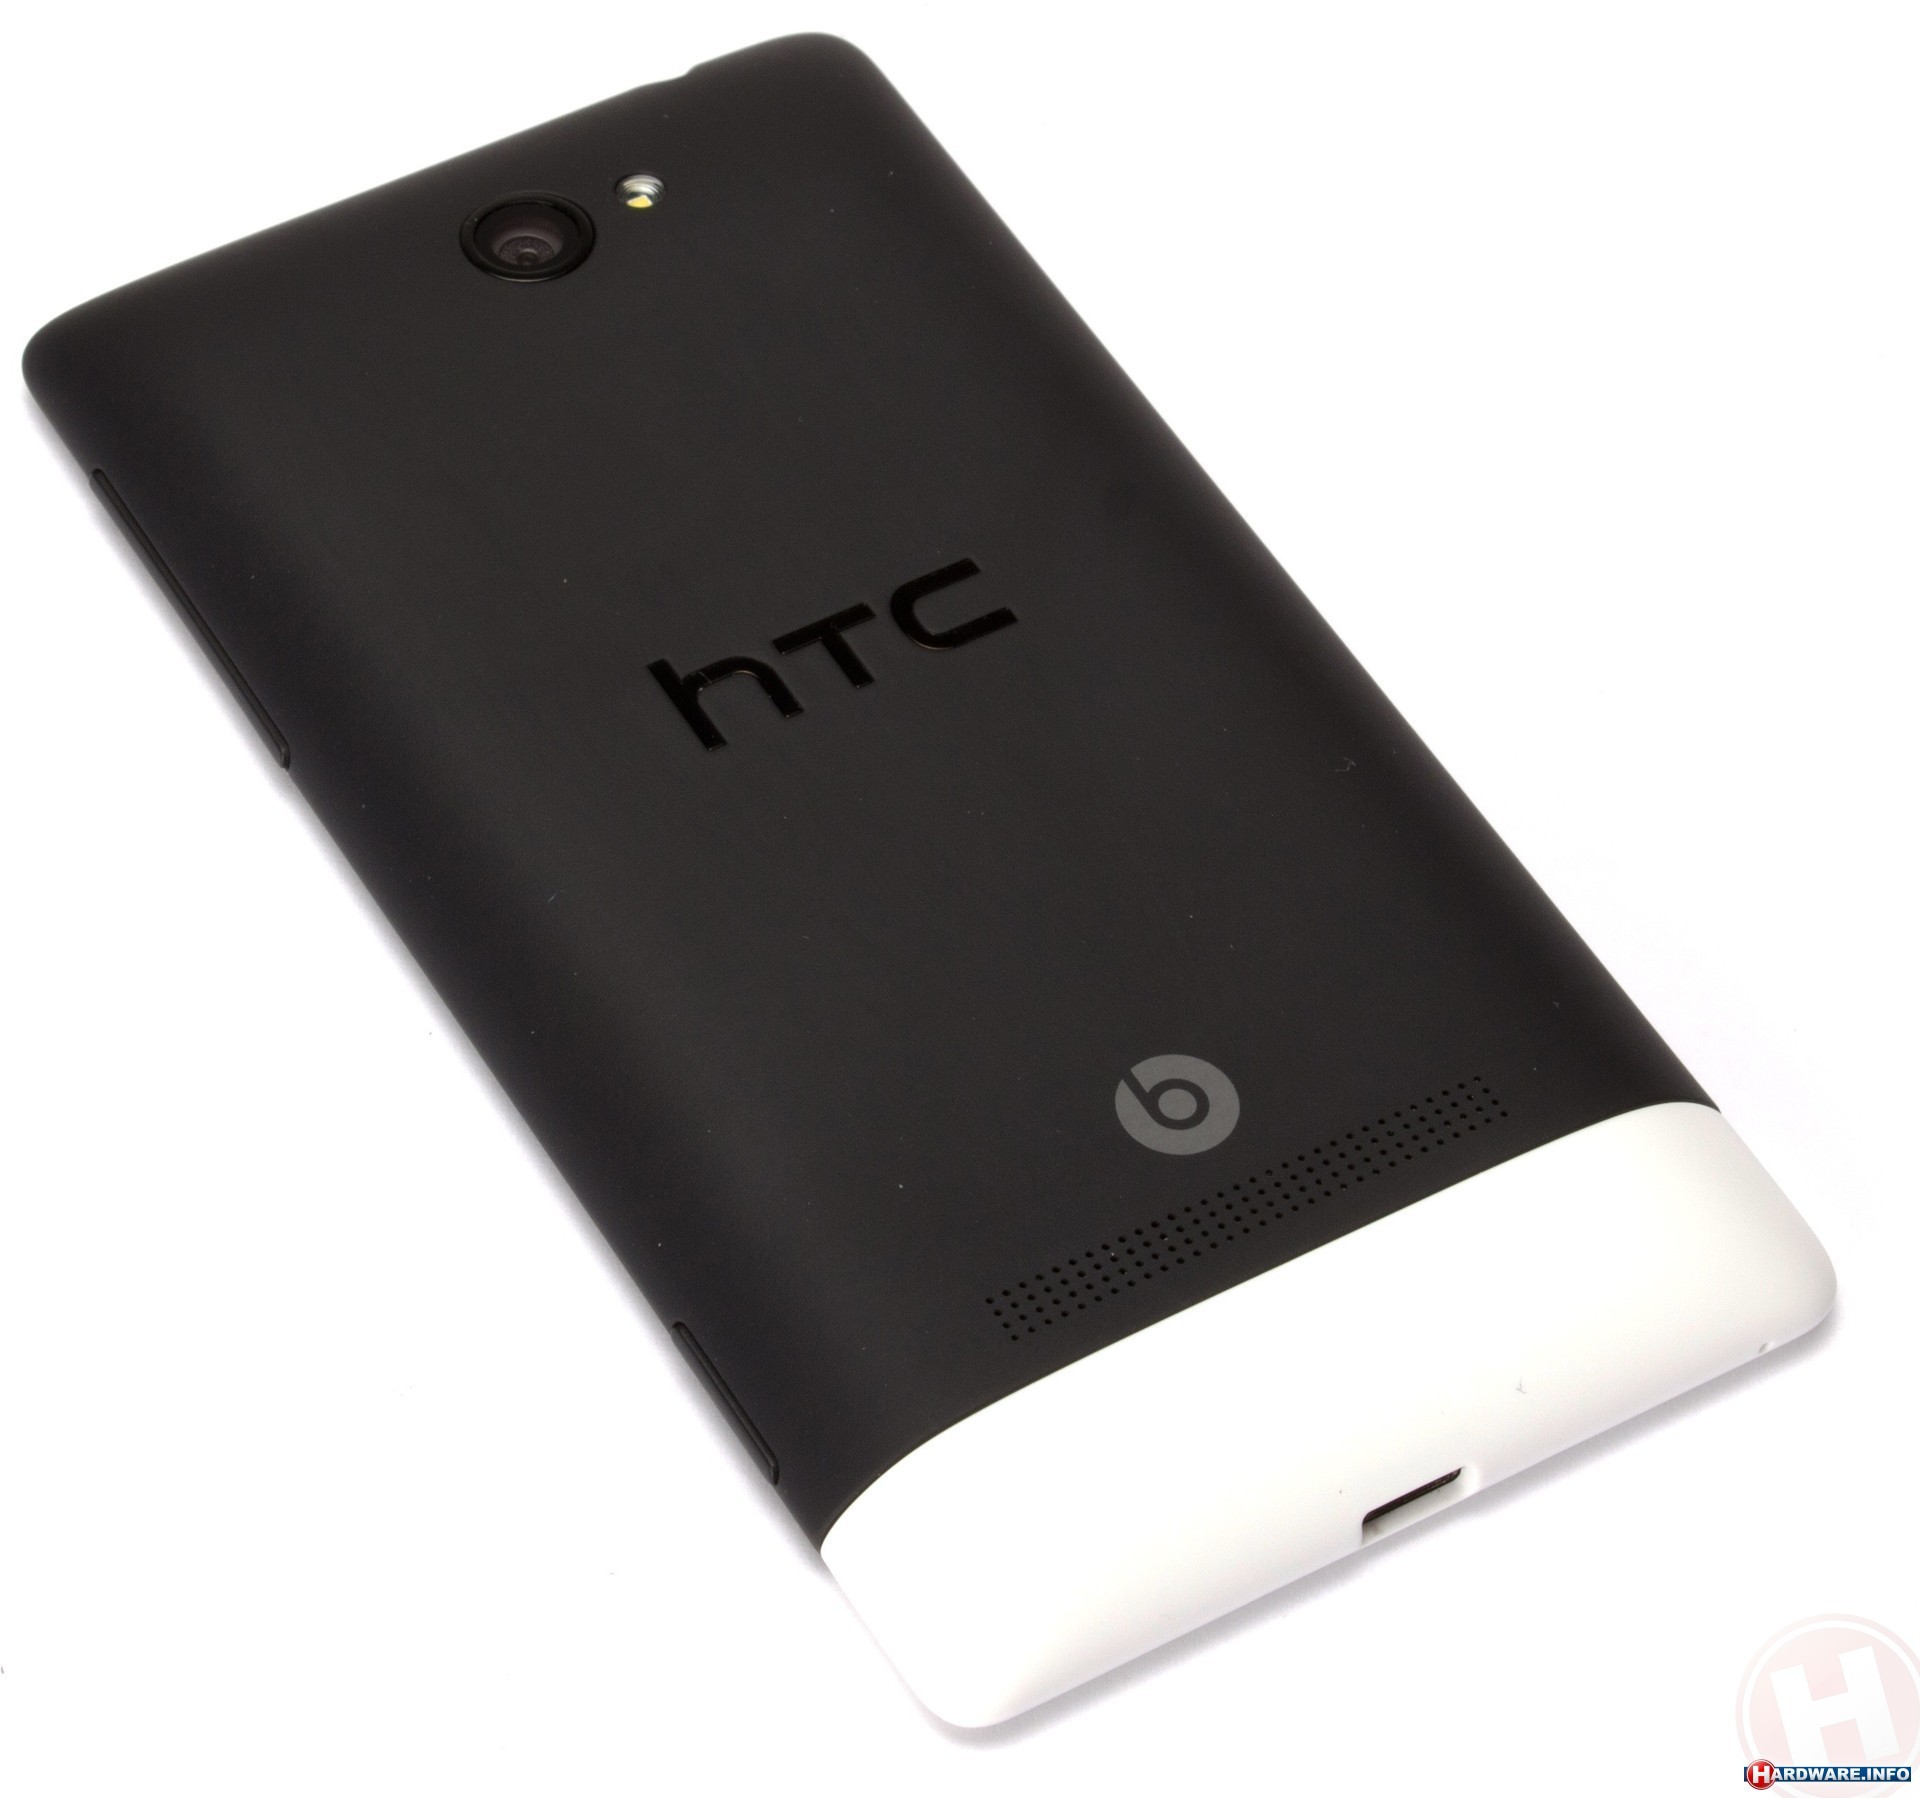 HTC Windows Phone 8S Black/White smartphone - Info